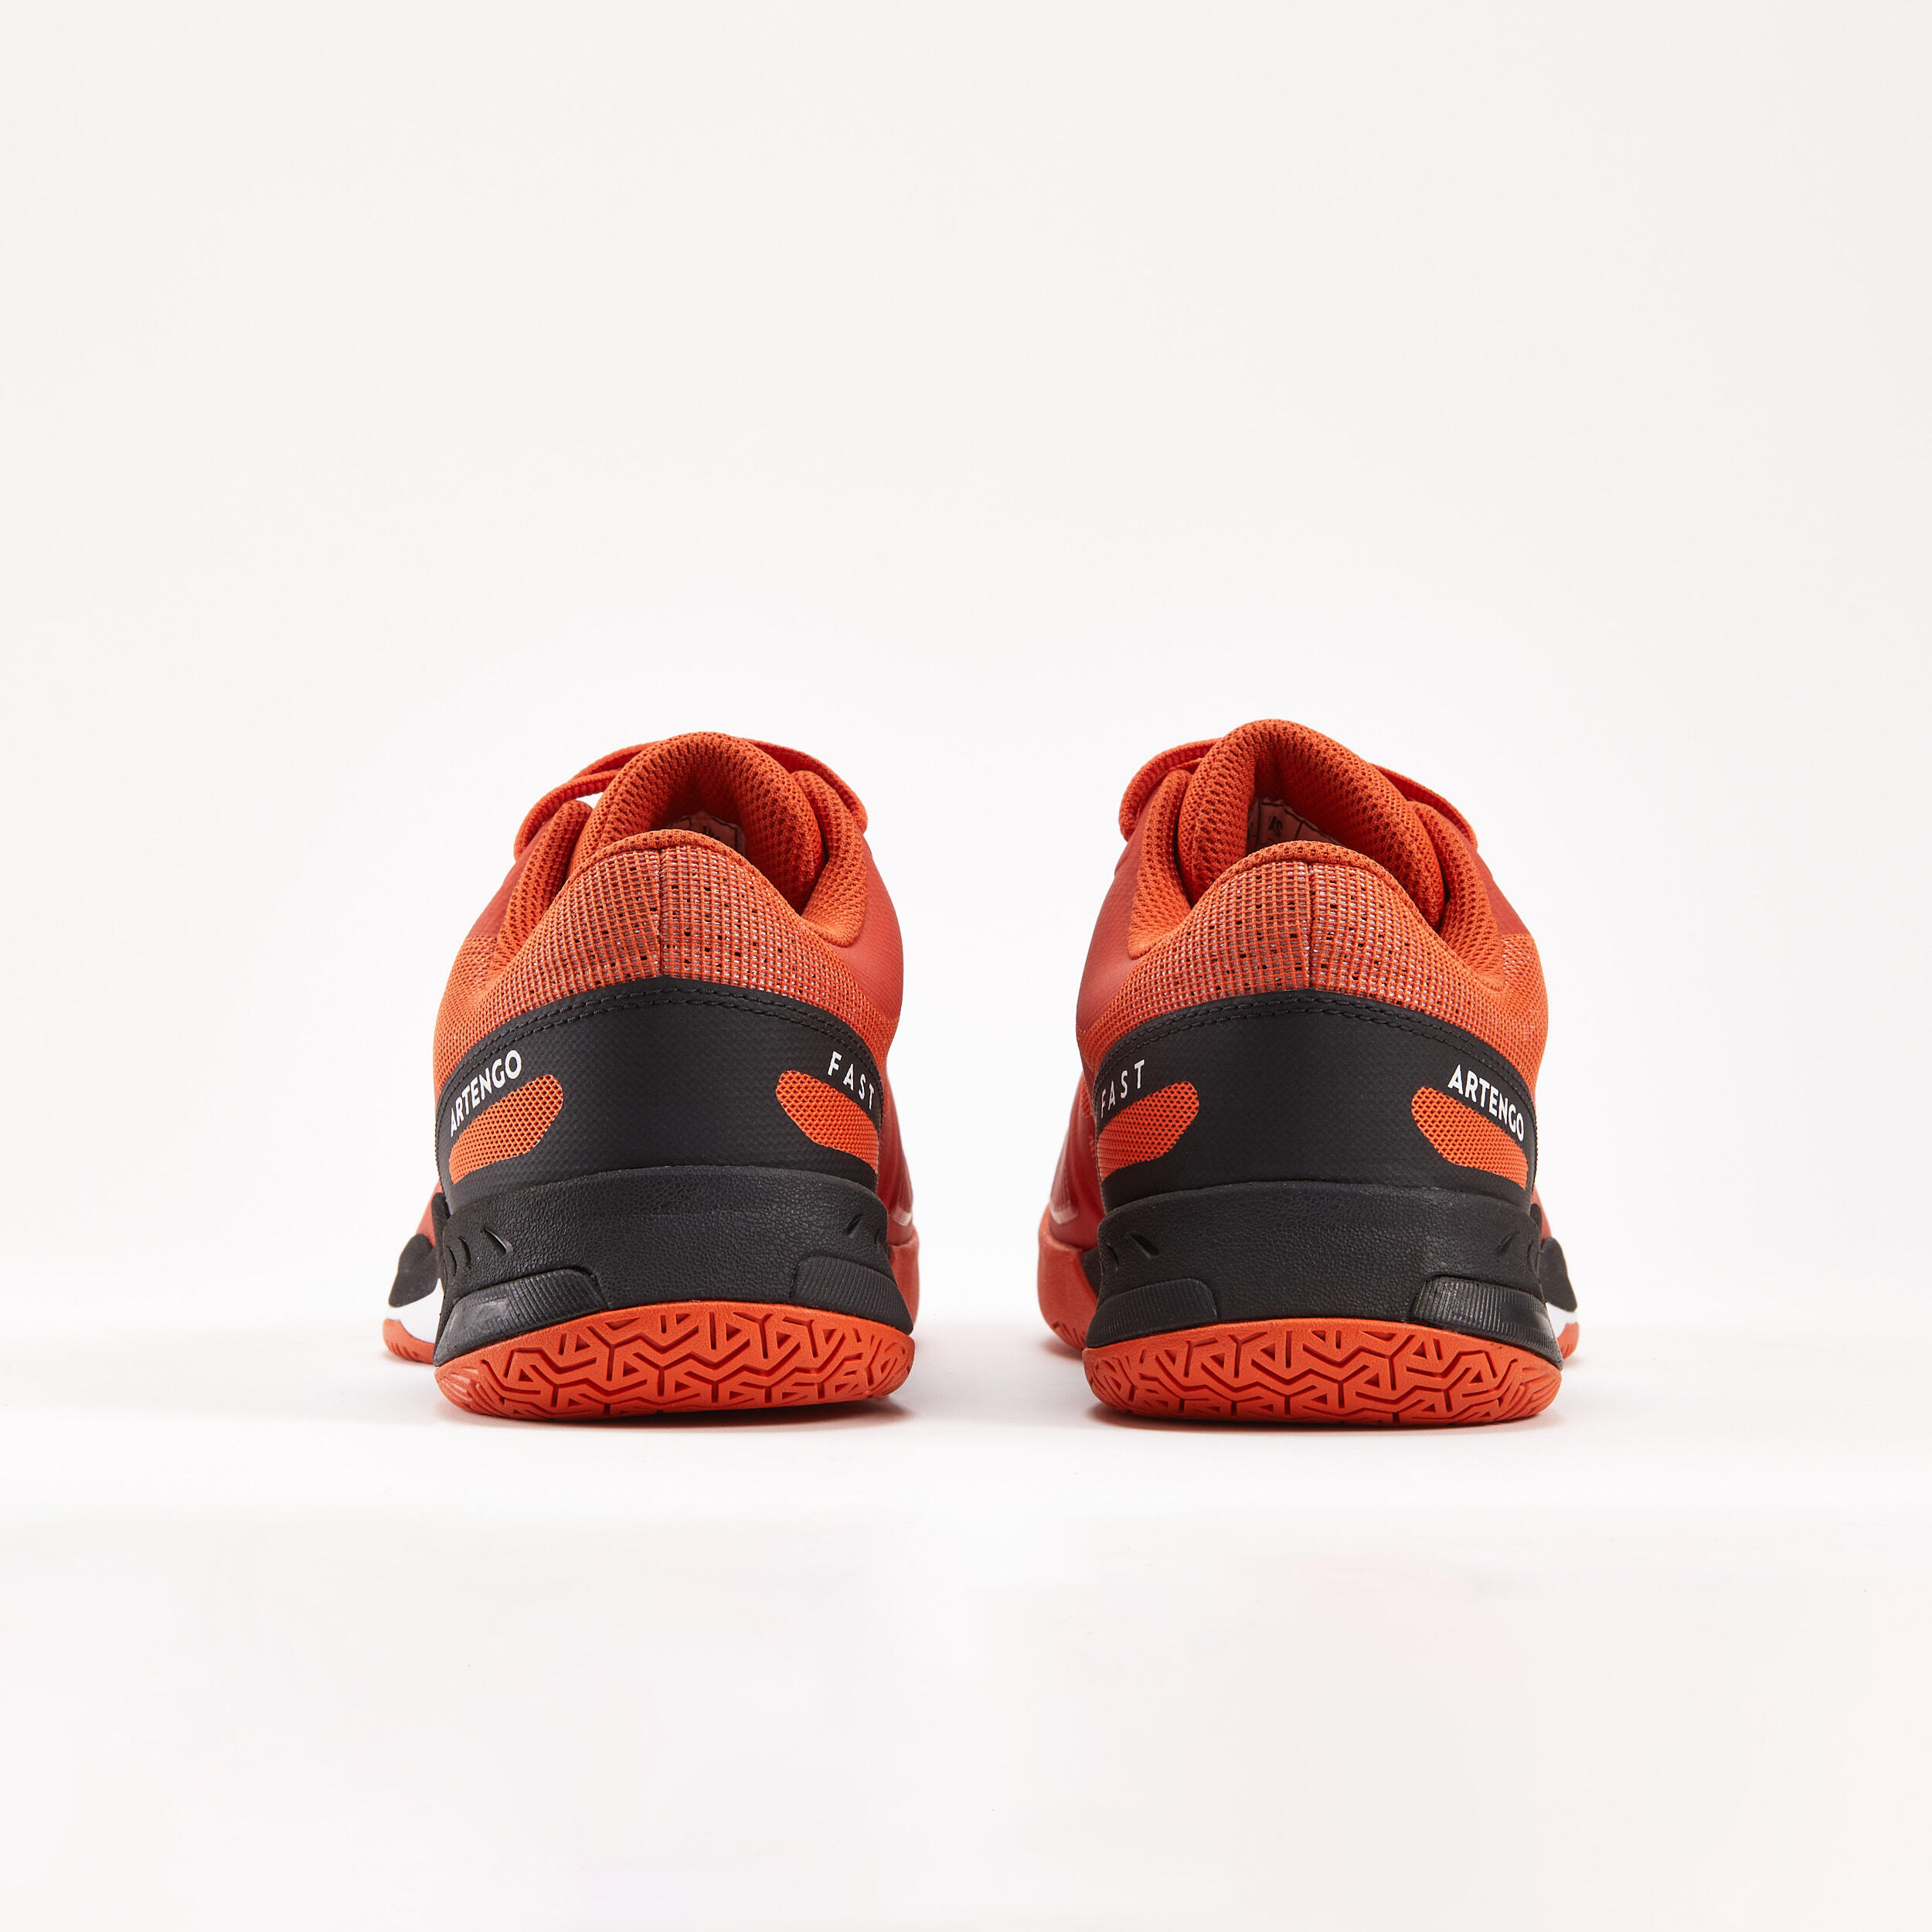 Men's Multicourt Tennis Shoes Fast - Terracotta Red/Black 7/9